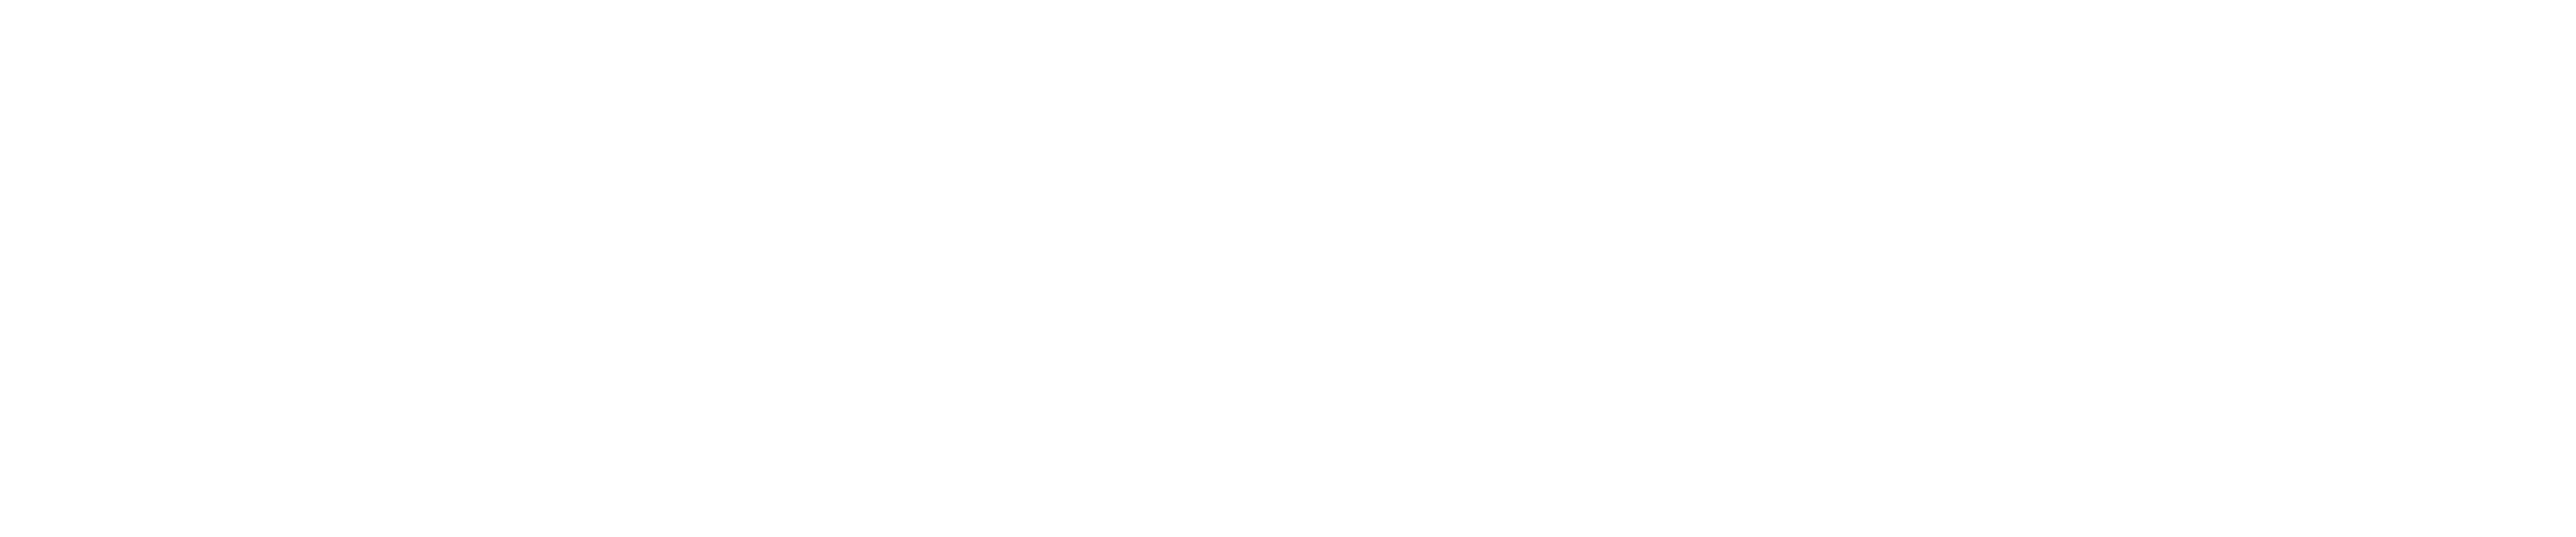 Centric Pricing logo